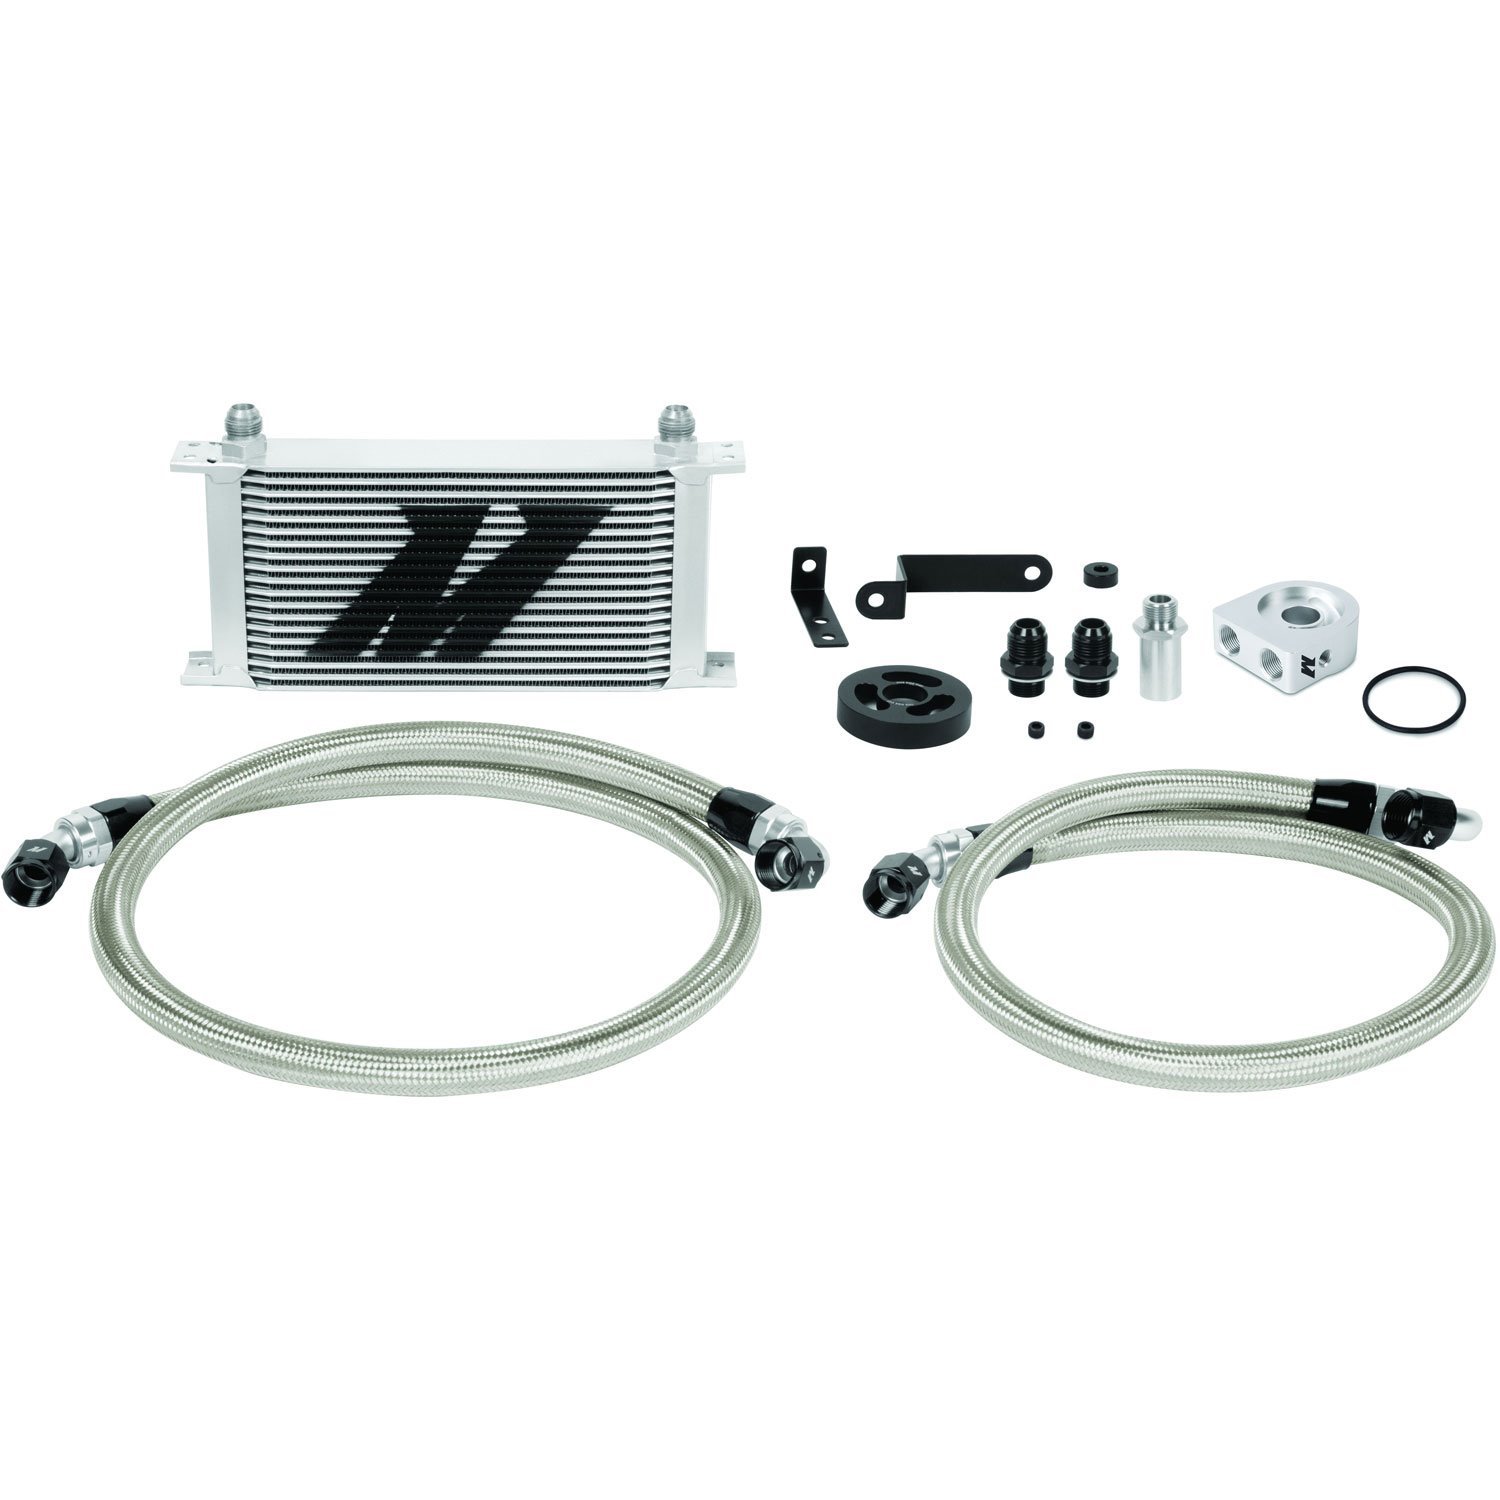 Subaru WRX Oil Cooler Kit - MFG Part No. MMOC-WRX-08